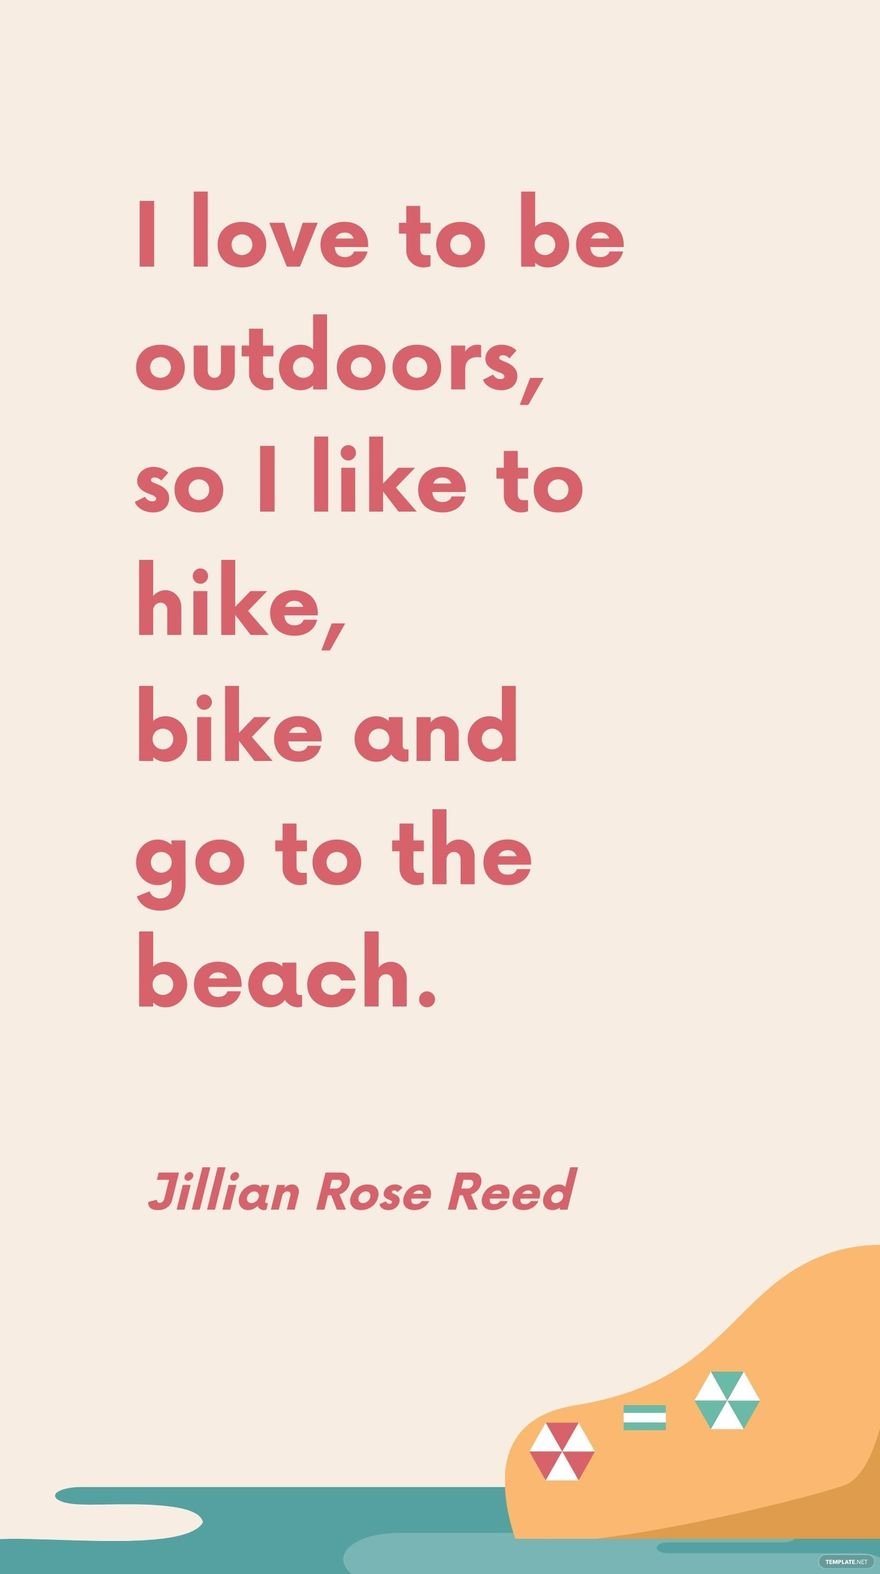 Free Jillian Rose Reed - I love to be outdoors, so I like to hike, bike and go to the beach.